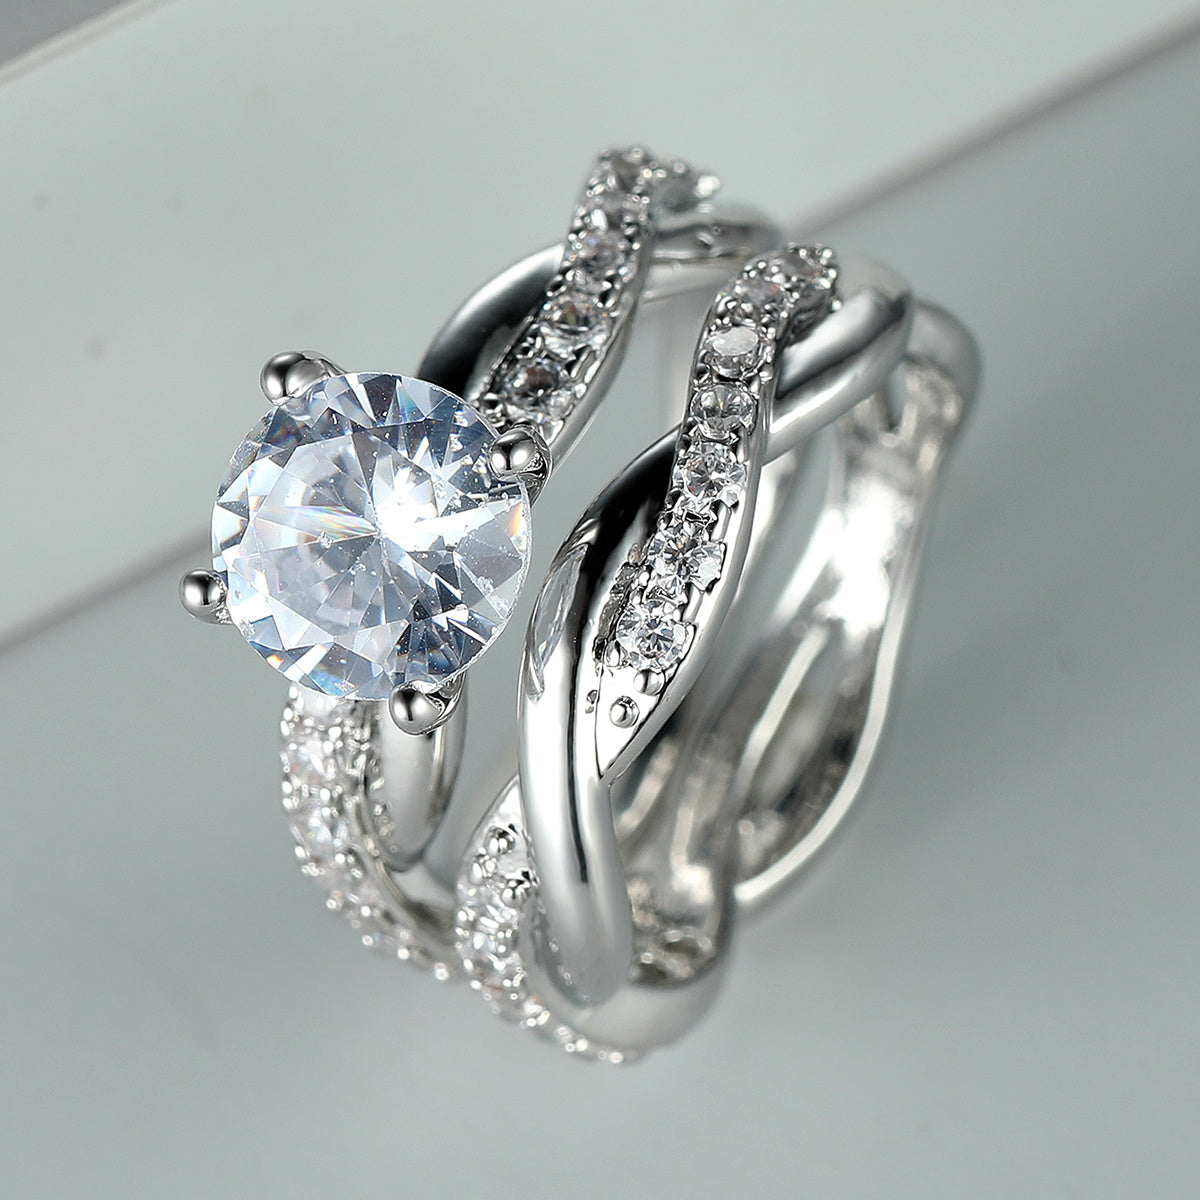 Beautiful 18K Gold Plated Twist Design Zircon Ring Set - Perfect Gift for Women & Girls!